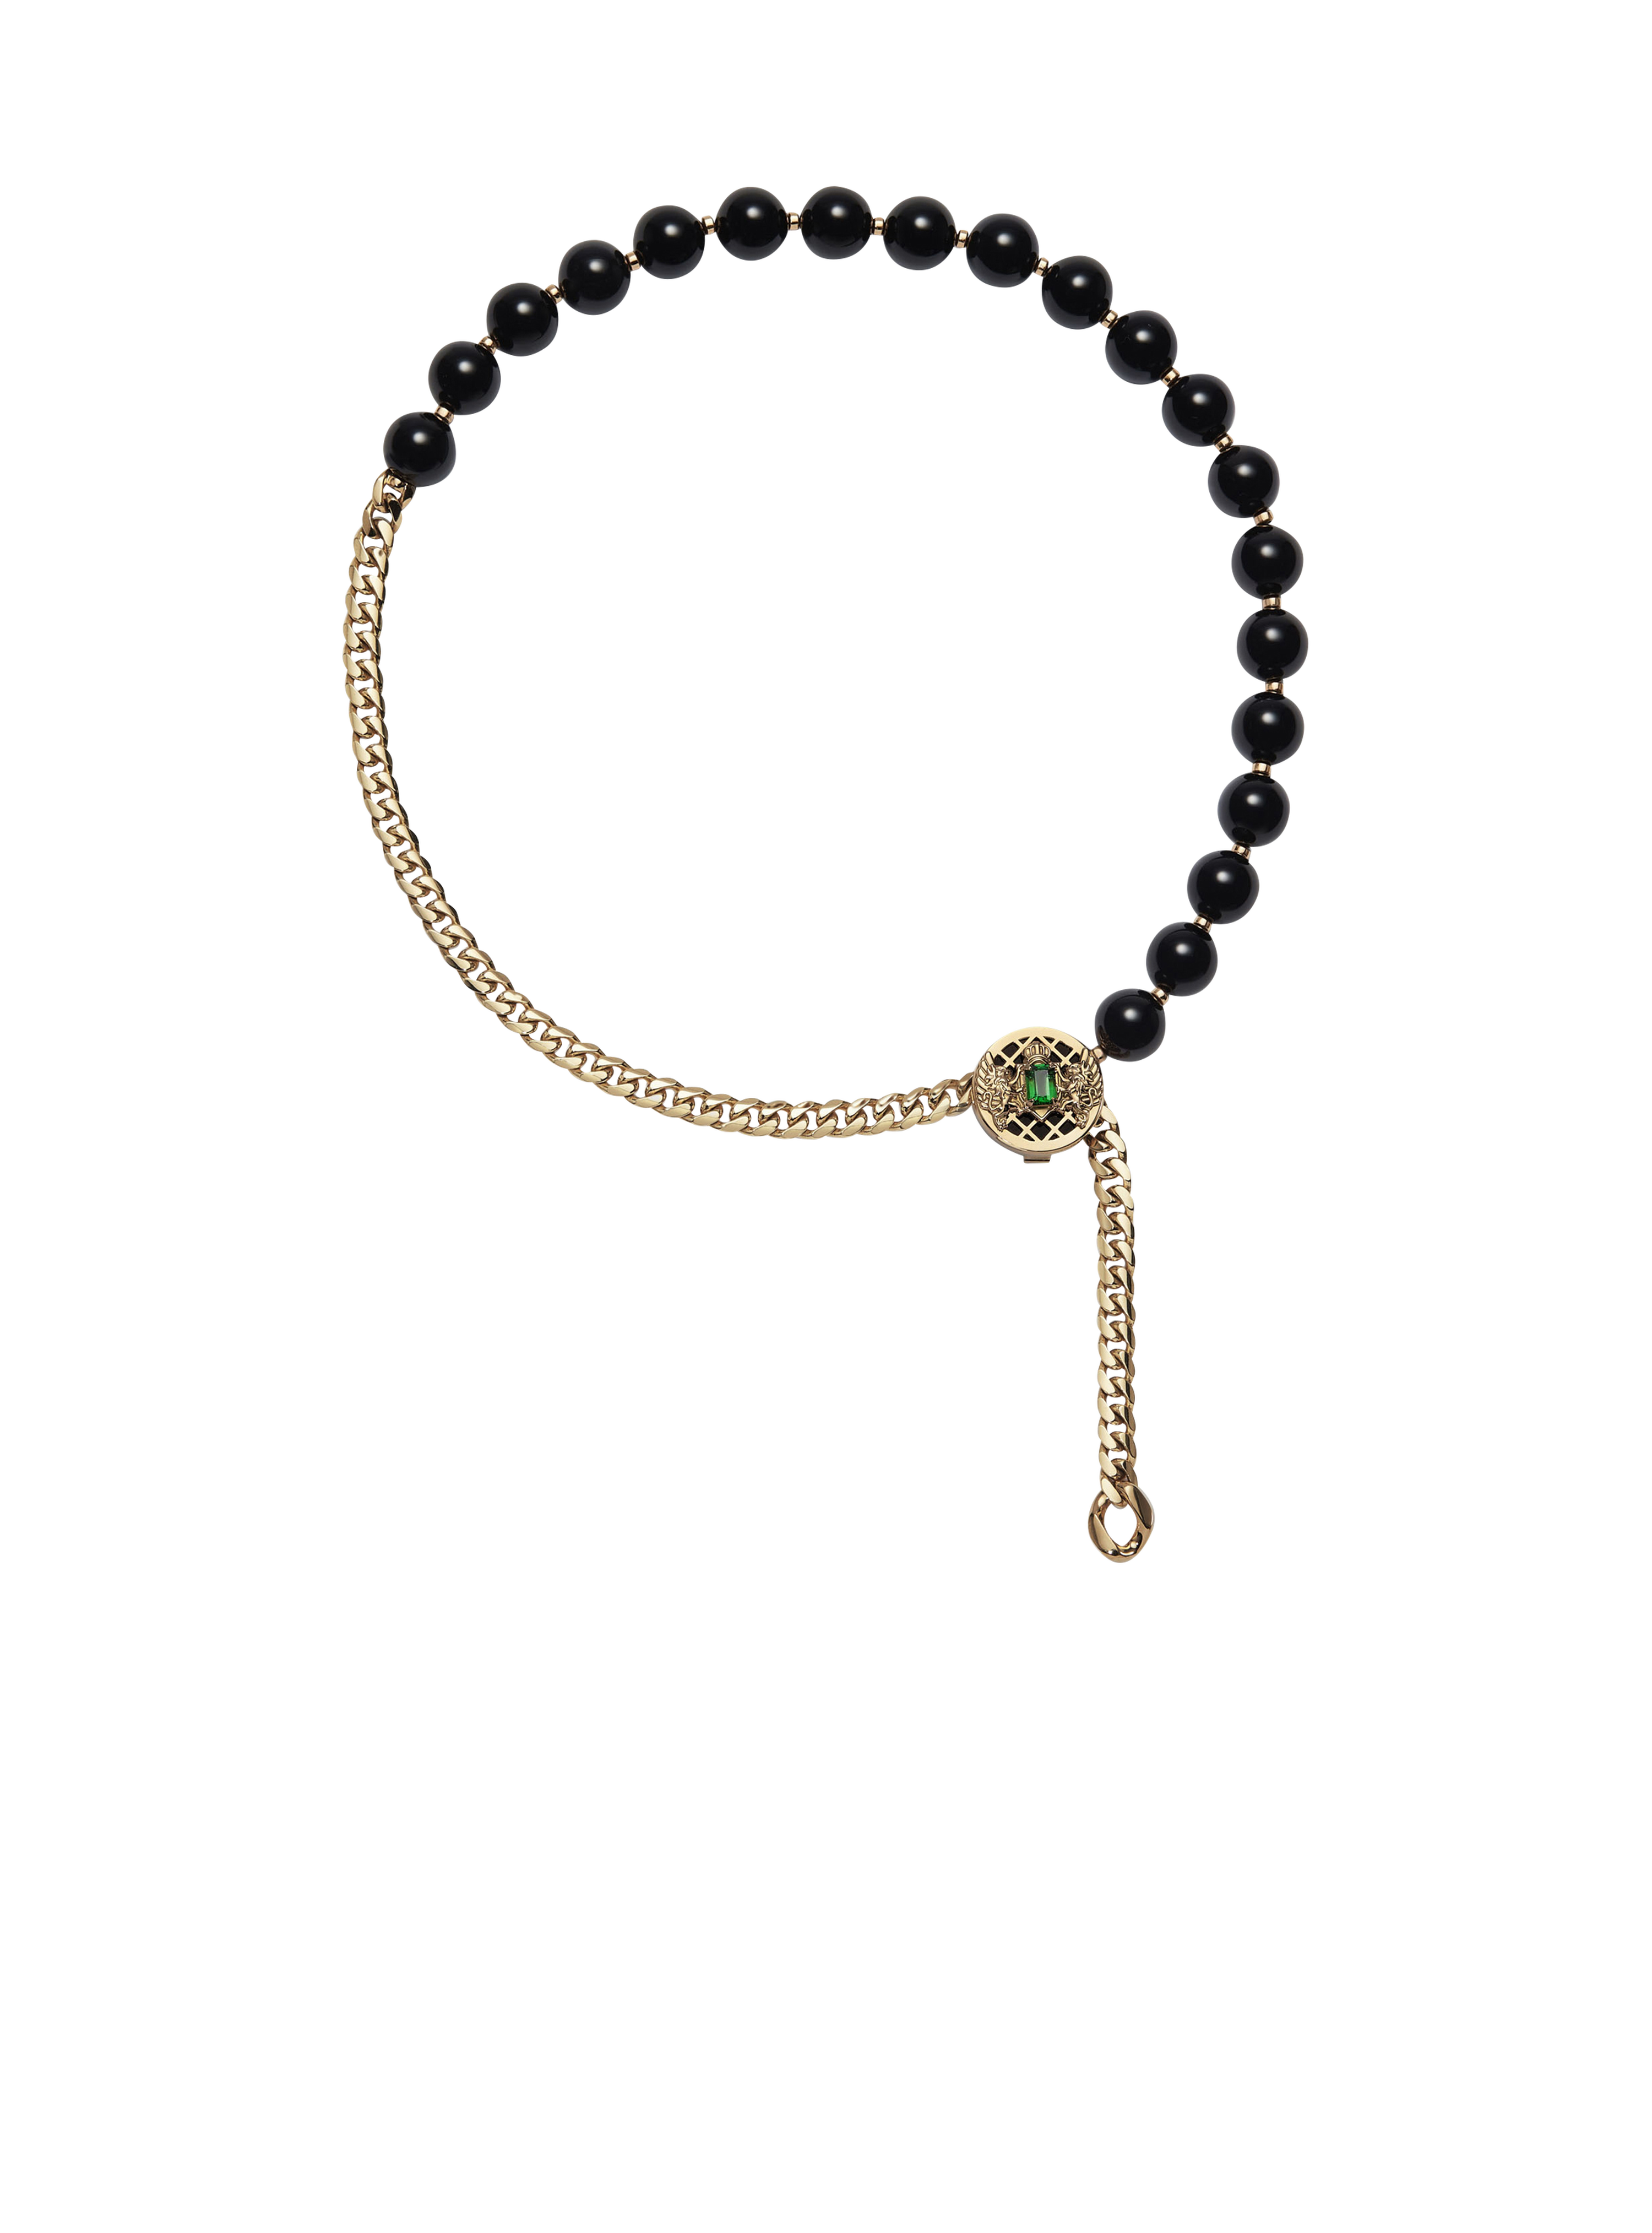 Emblem Beads Necklace, gold